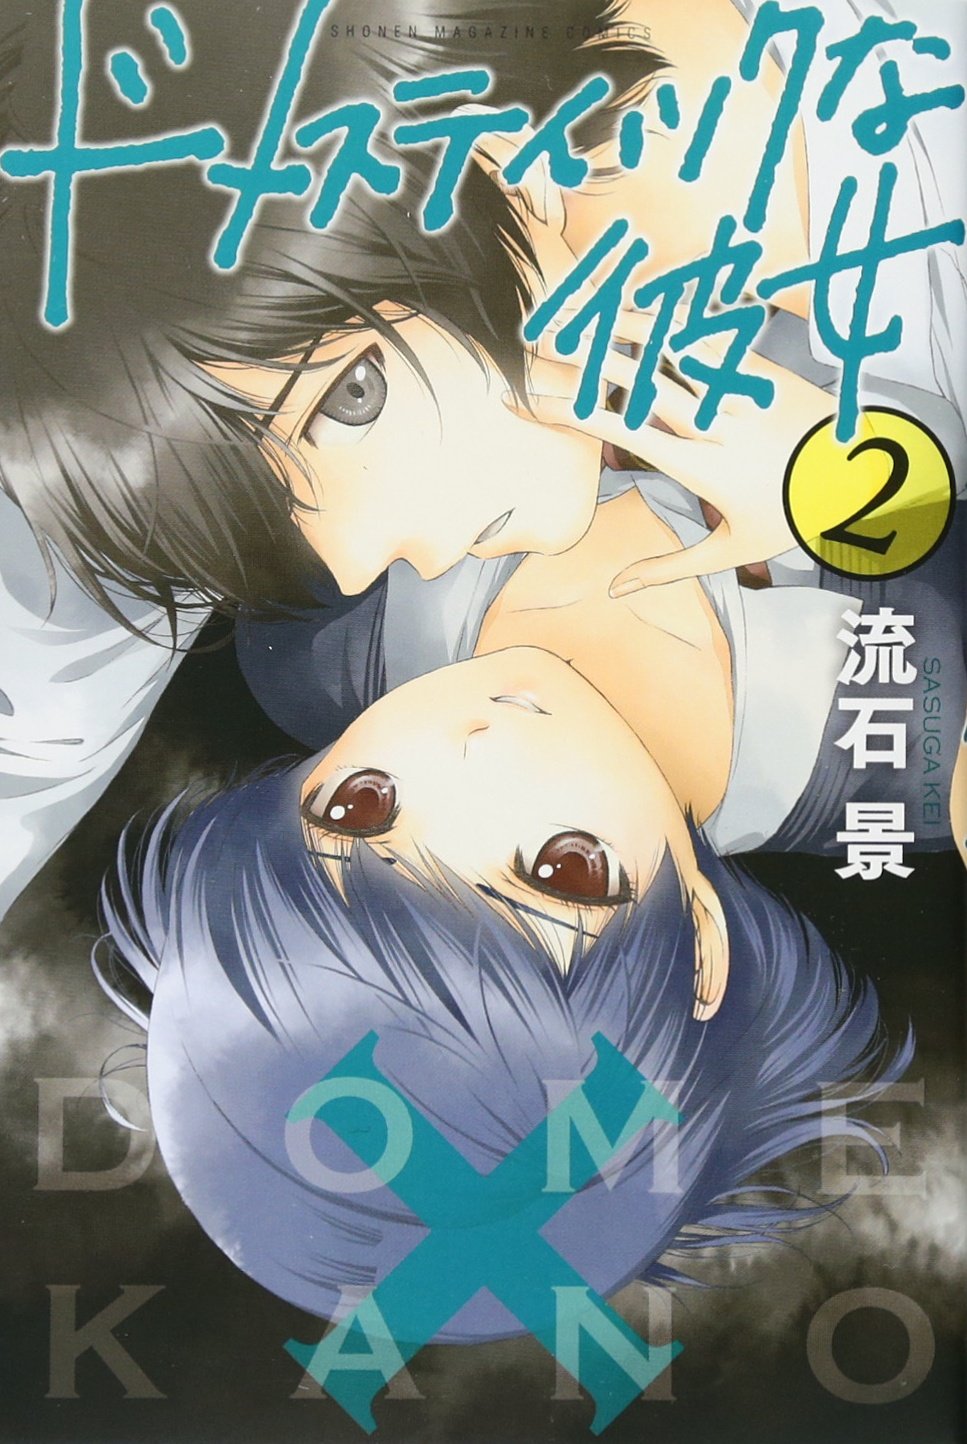 Buy Domestic Girlfriend Volume 28 [Final Volume] Kei Sasuga